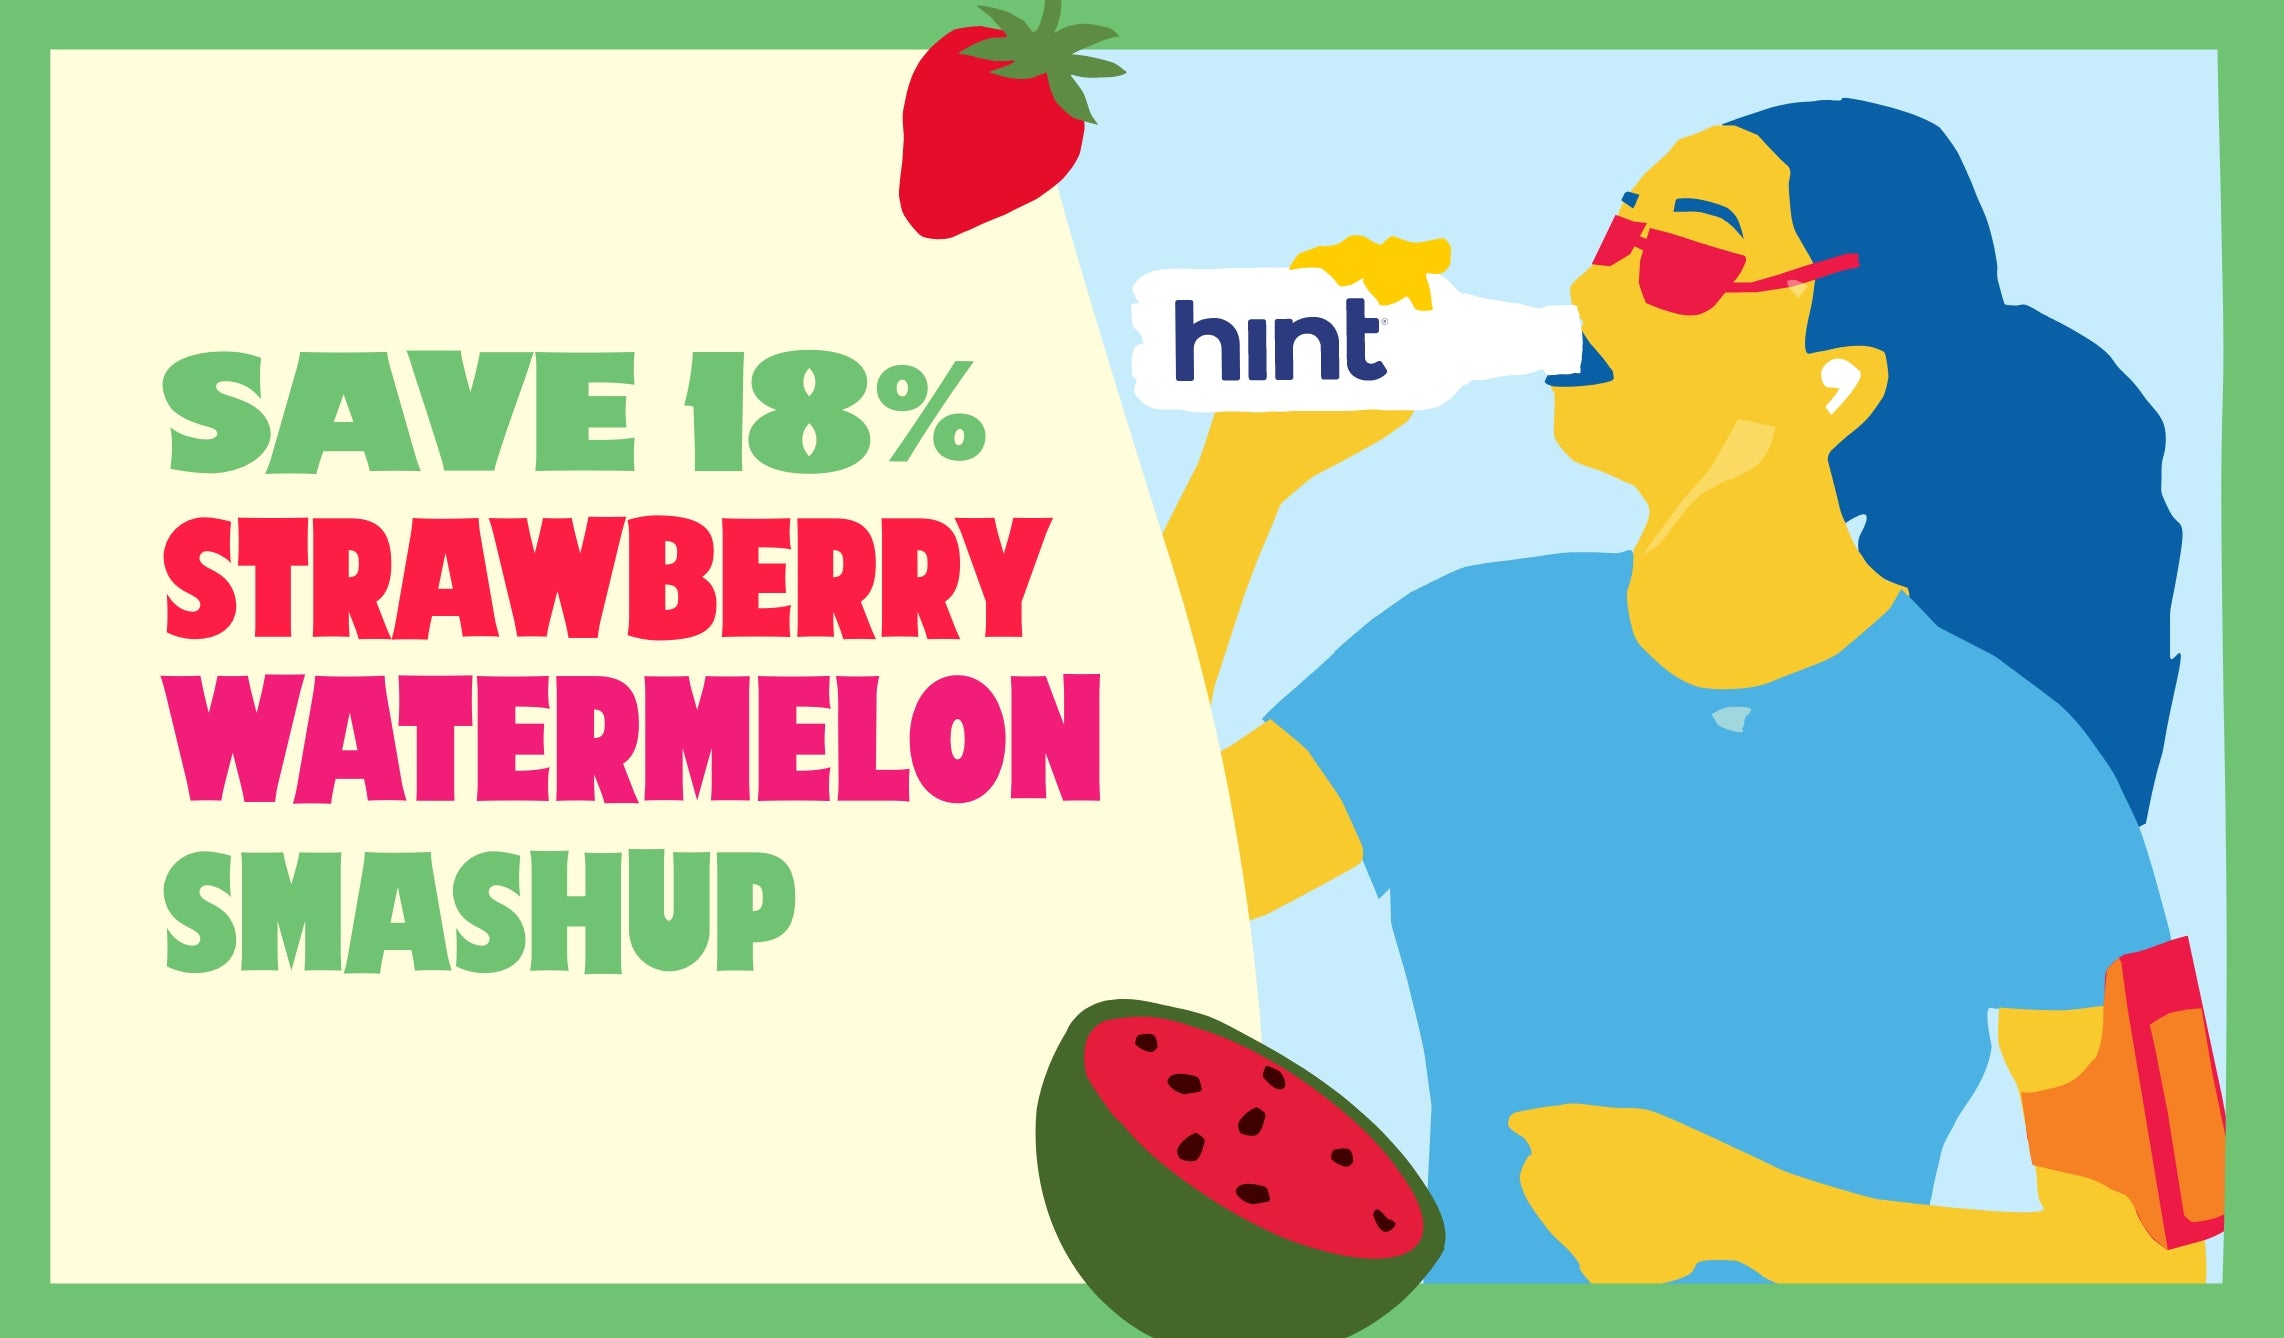 Save 18% strawberry watermelon smashup